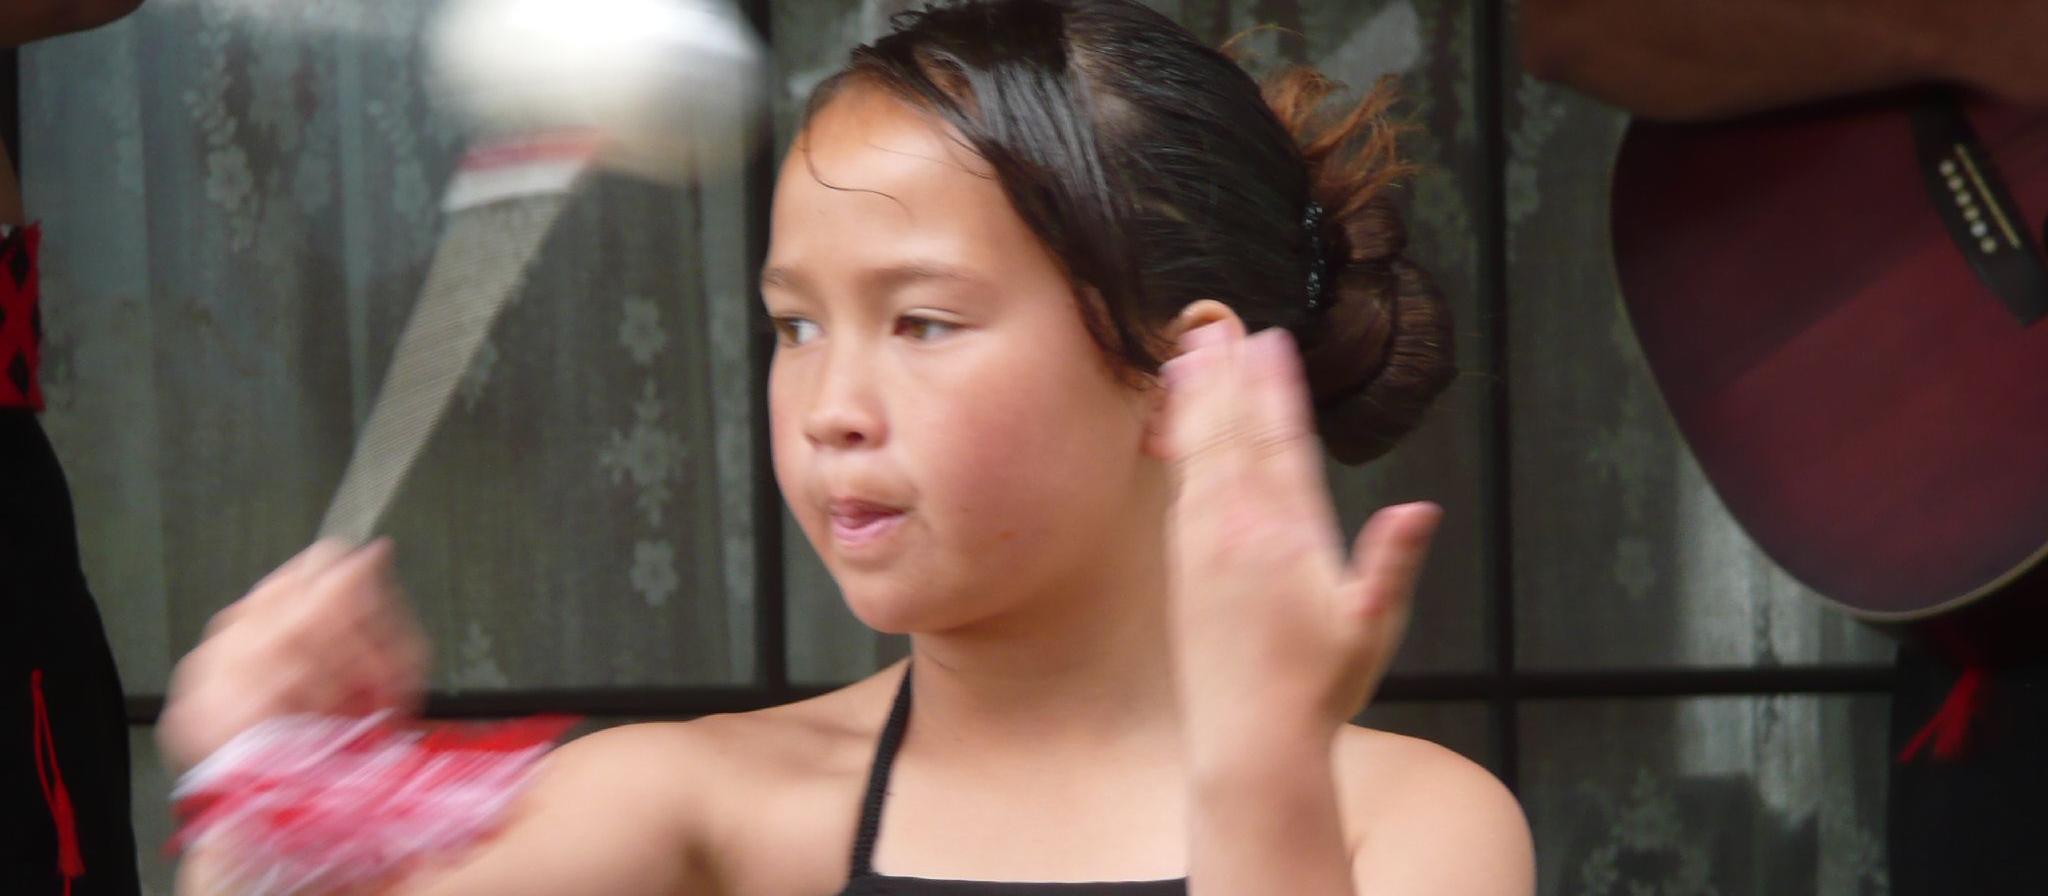 Māori girl, kapa haka, poi [credit:Seth Mazow, 2007]